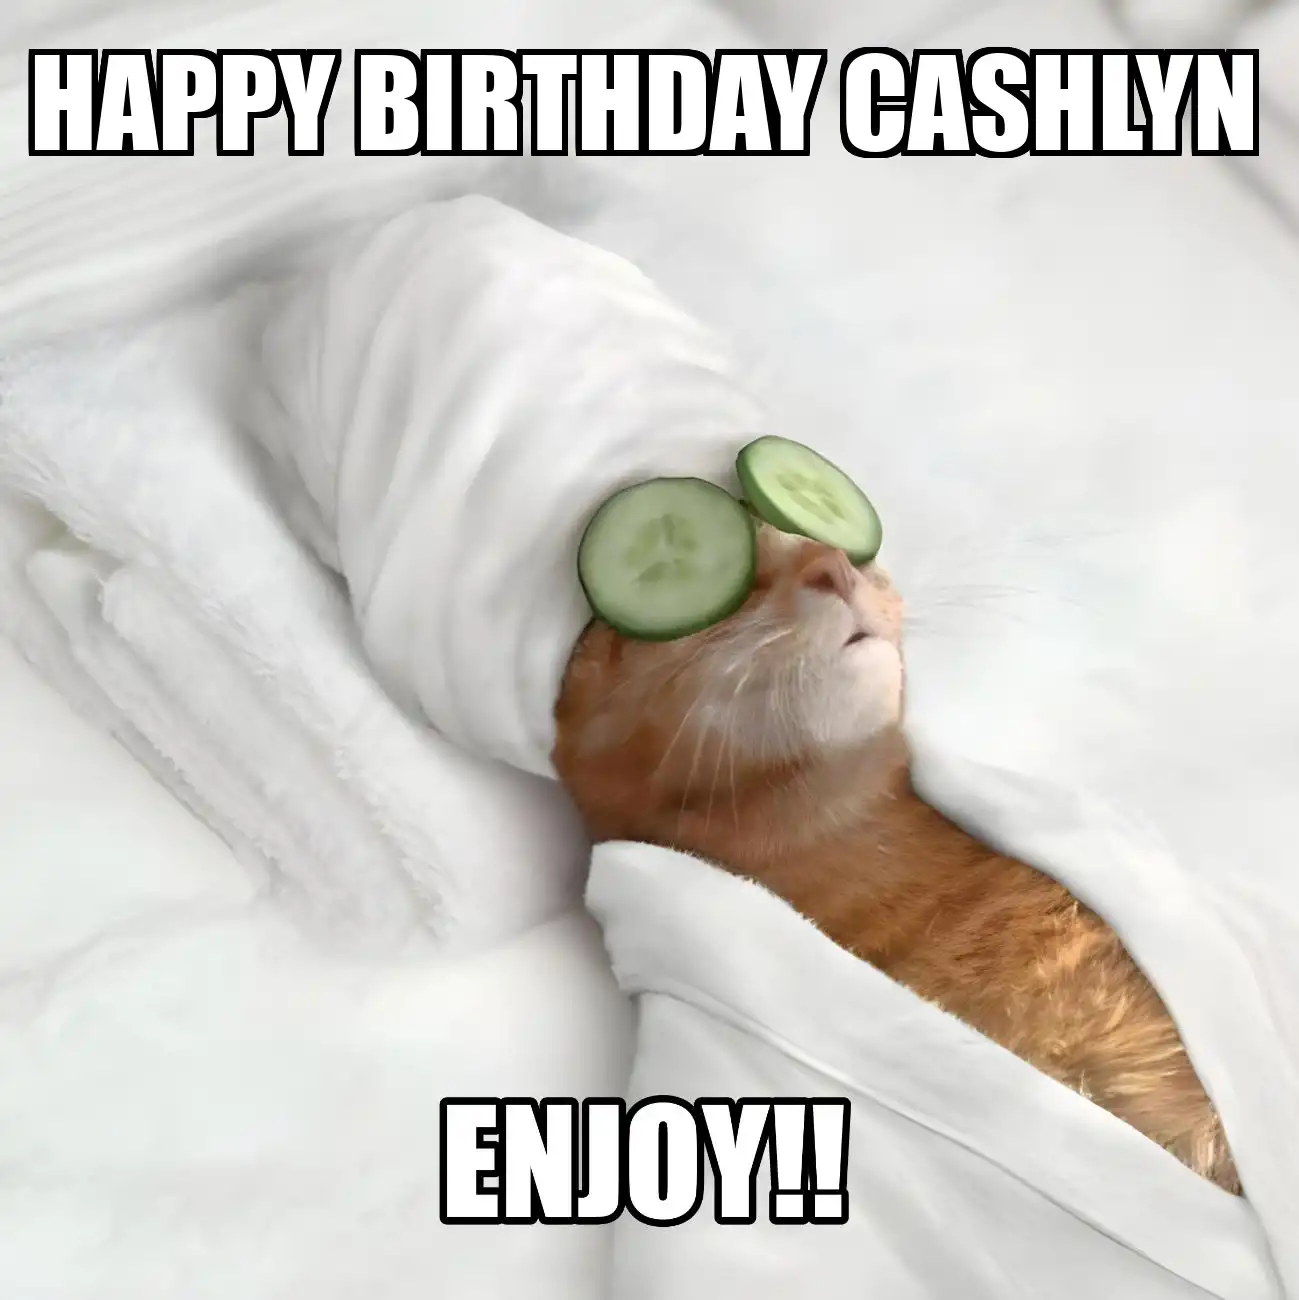 Happy Birthday Cashlyn Enjoy Cat Meme